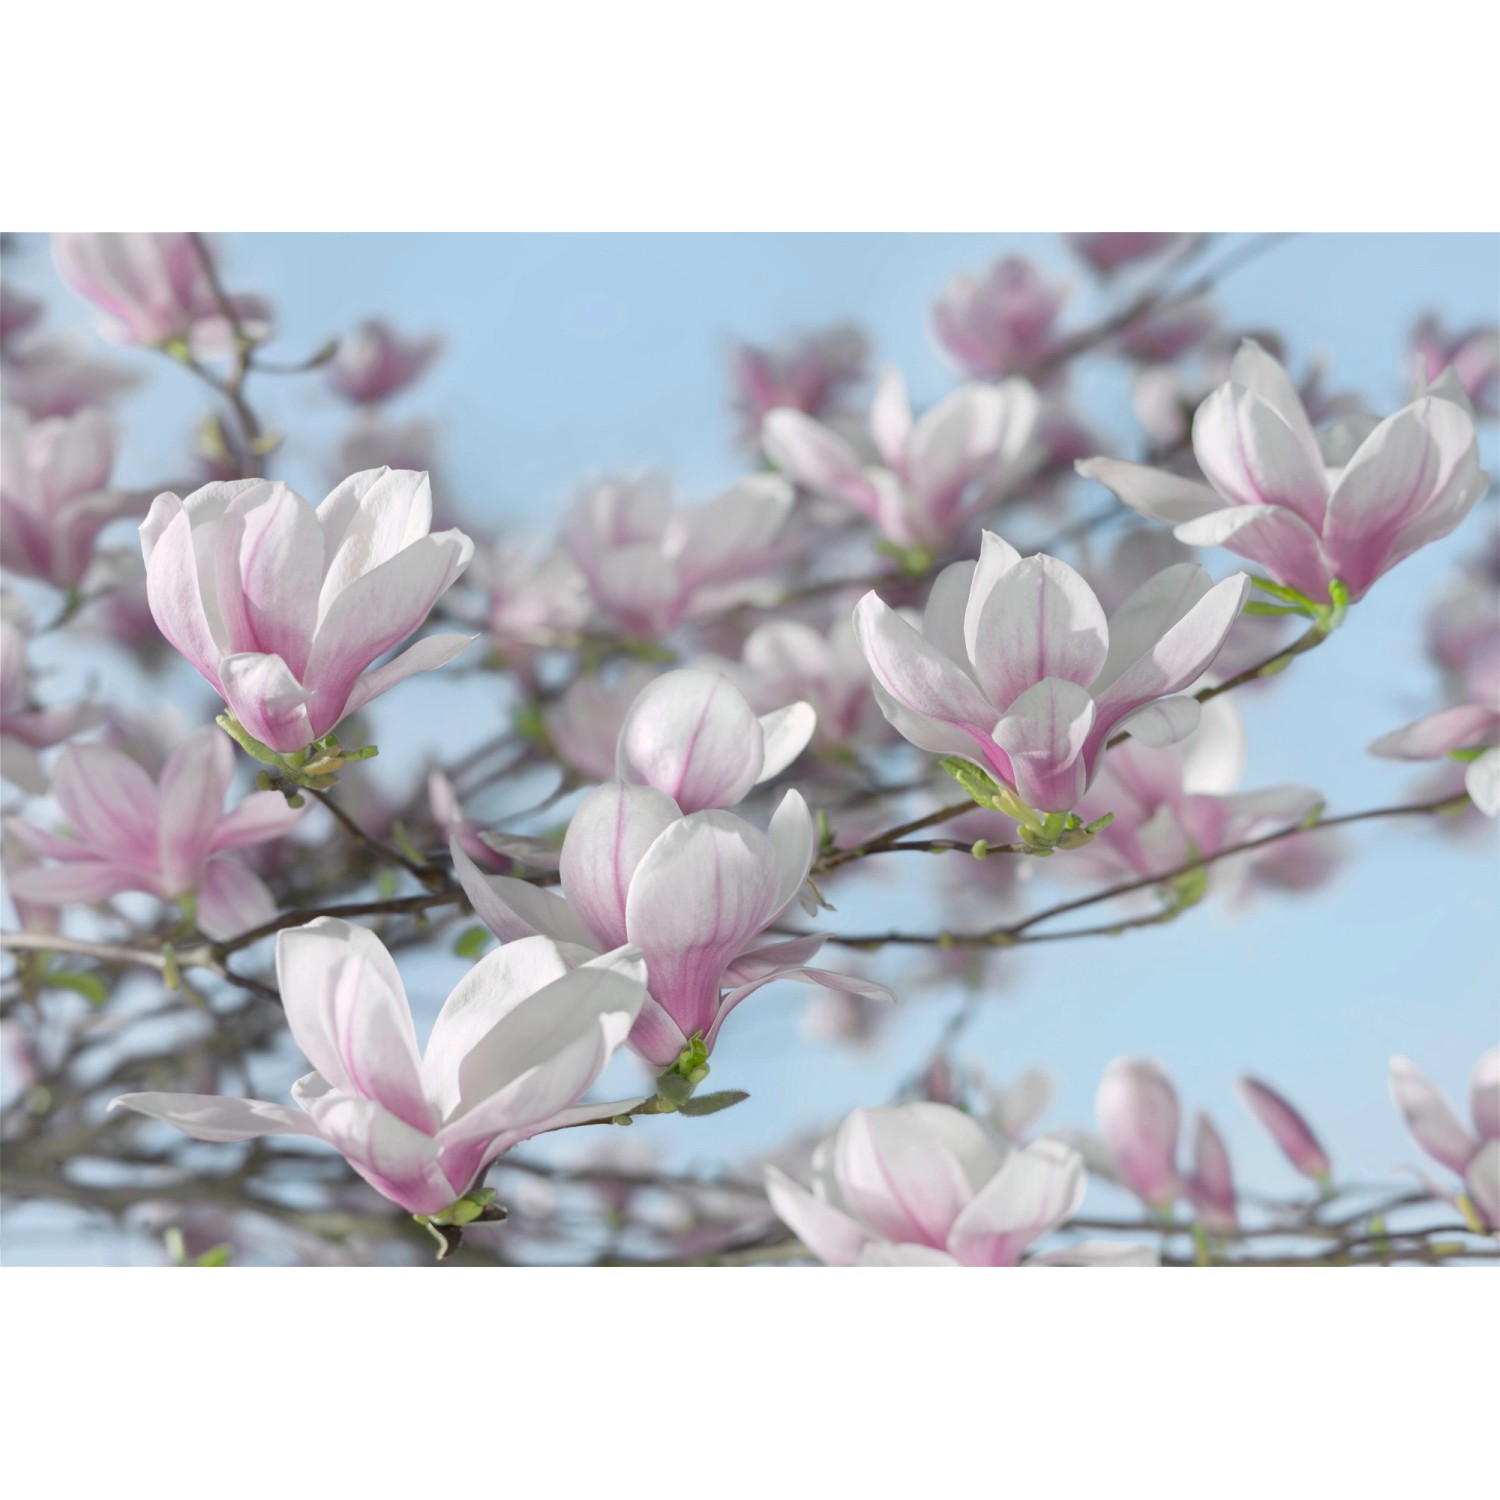 Komar Fototapete Magnolia 368 cm x 254 cm FSC®